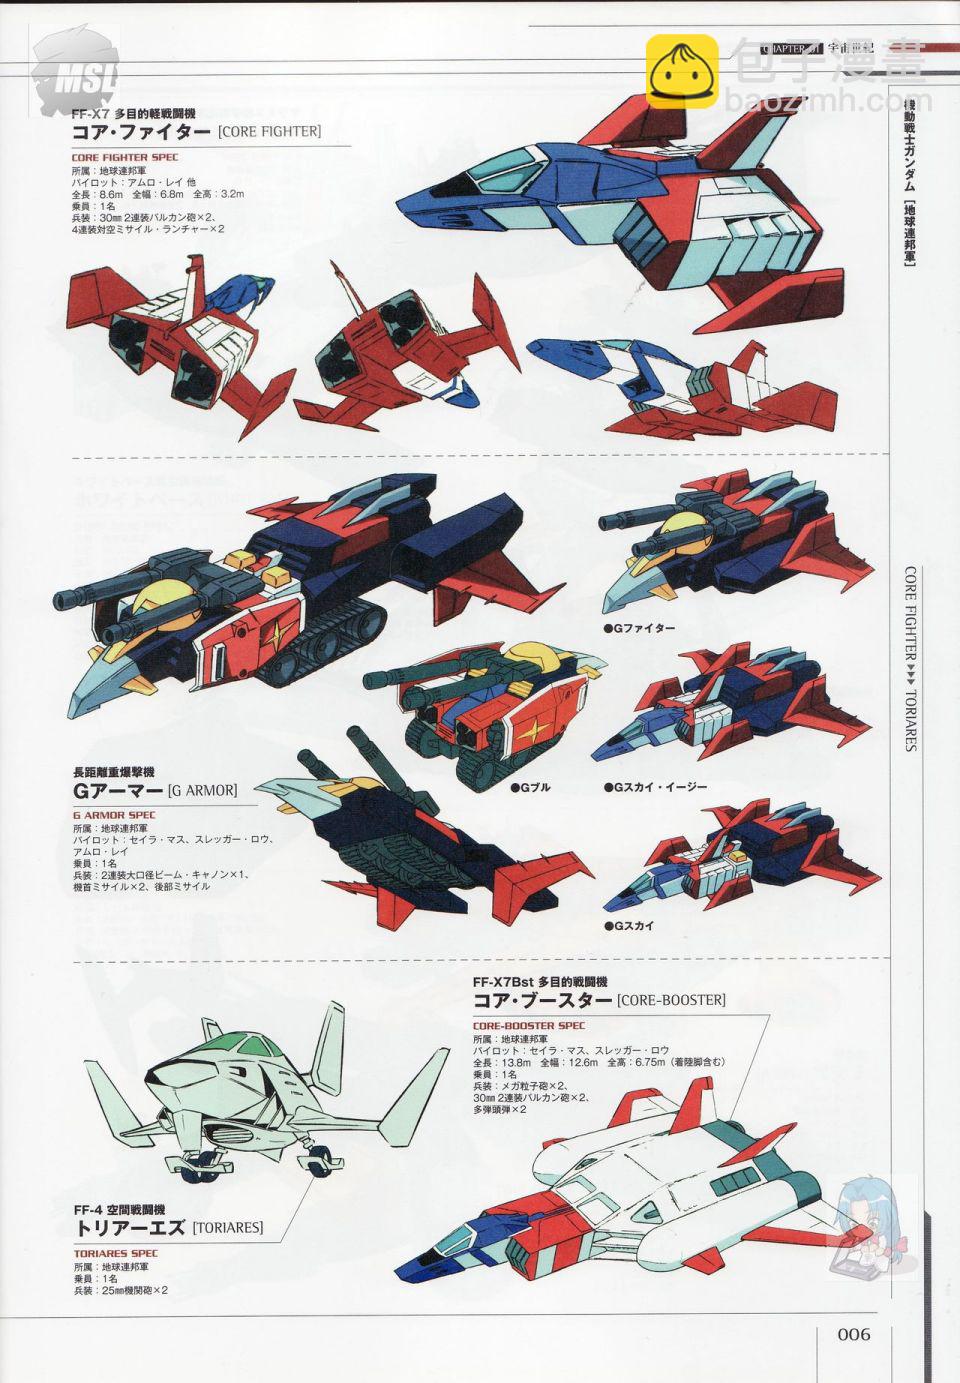 Mobile Suit Gundam - Ship amp; Aerospace Plane Encyclopedia - 第1卷(1/4) - 2